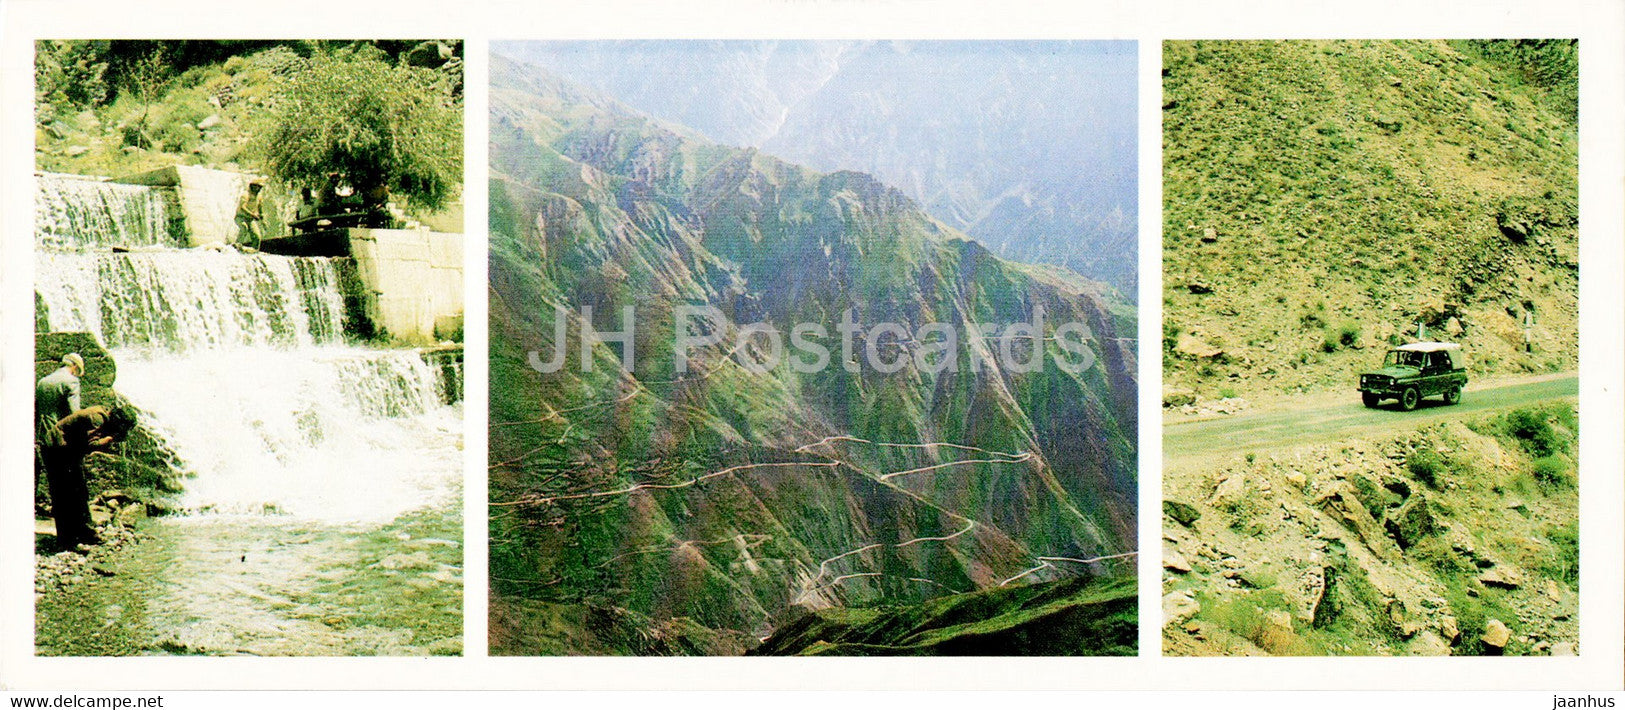 Pamir - Gorno-Badakhshan - Roads in the Pamir mountains - car jeep - 1985 - Tajikistan USSR - unused - JH Postcards